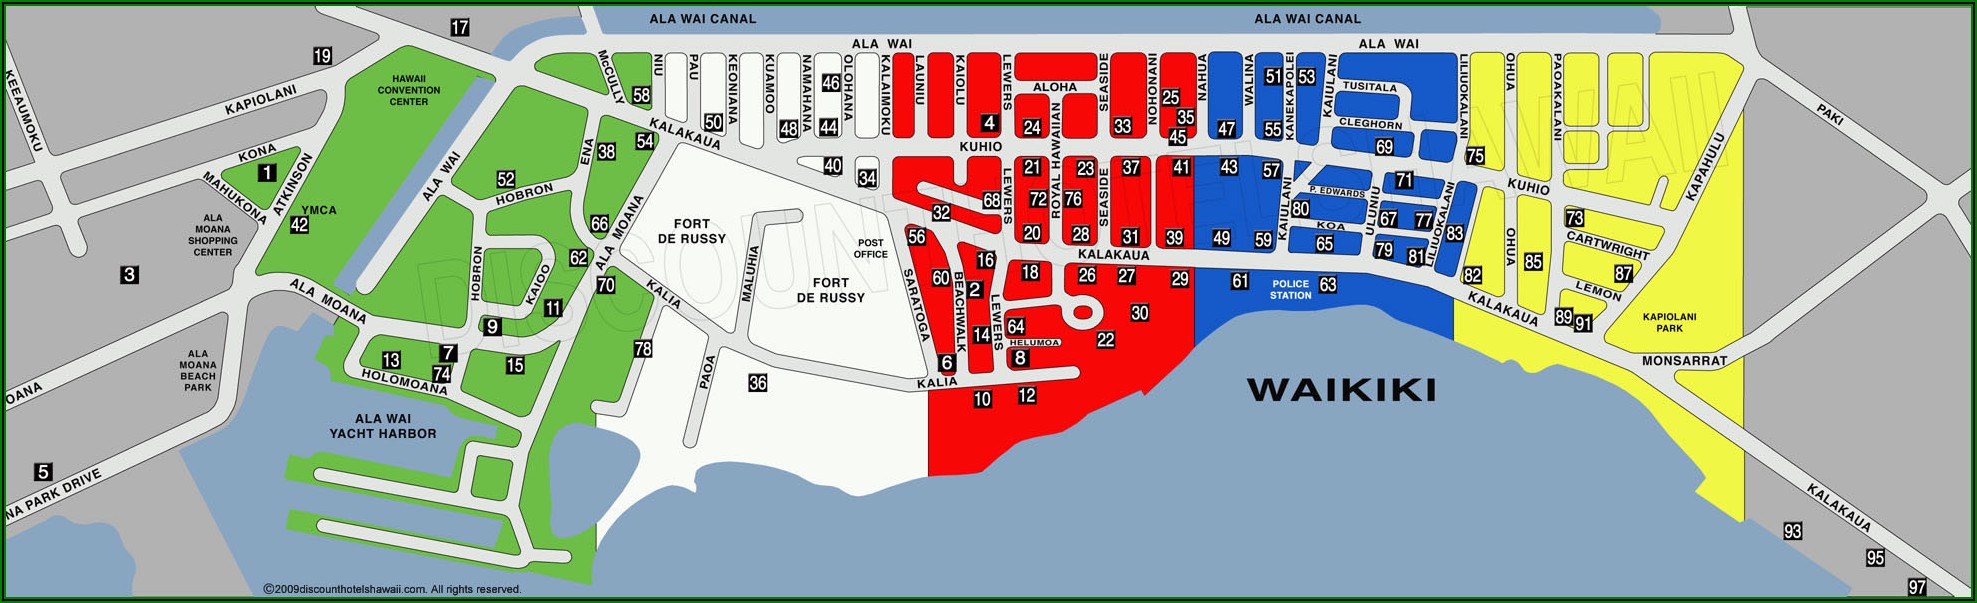 Map Of Hotels Along Waikiki Beach